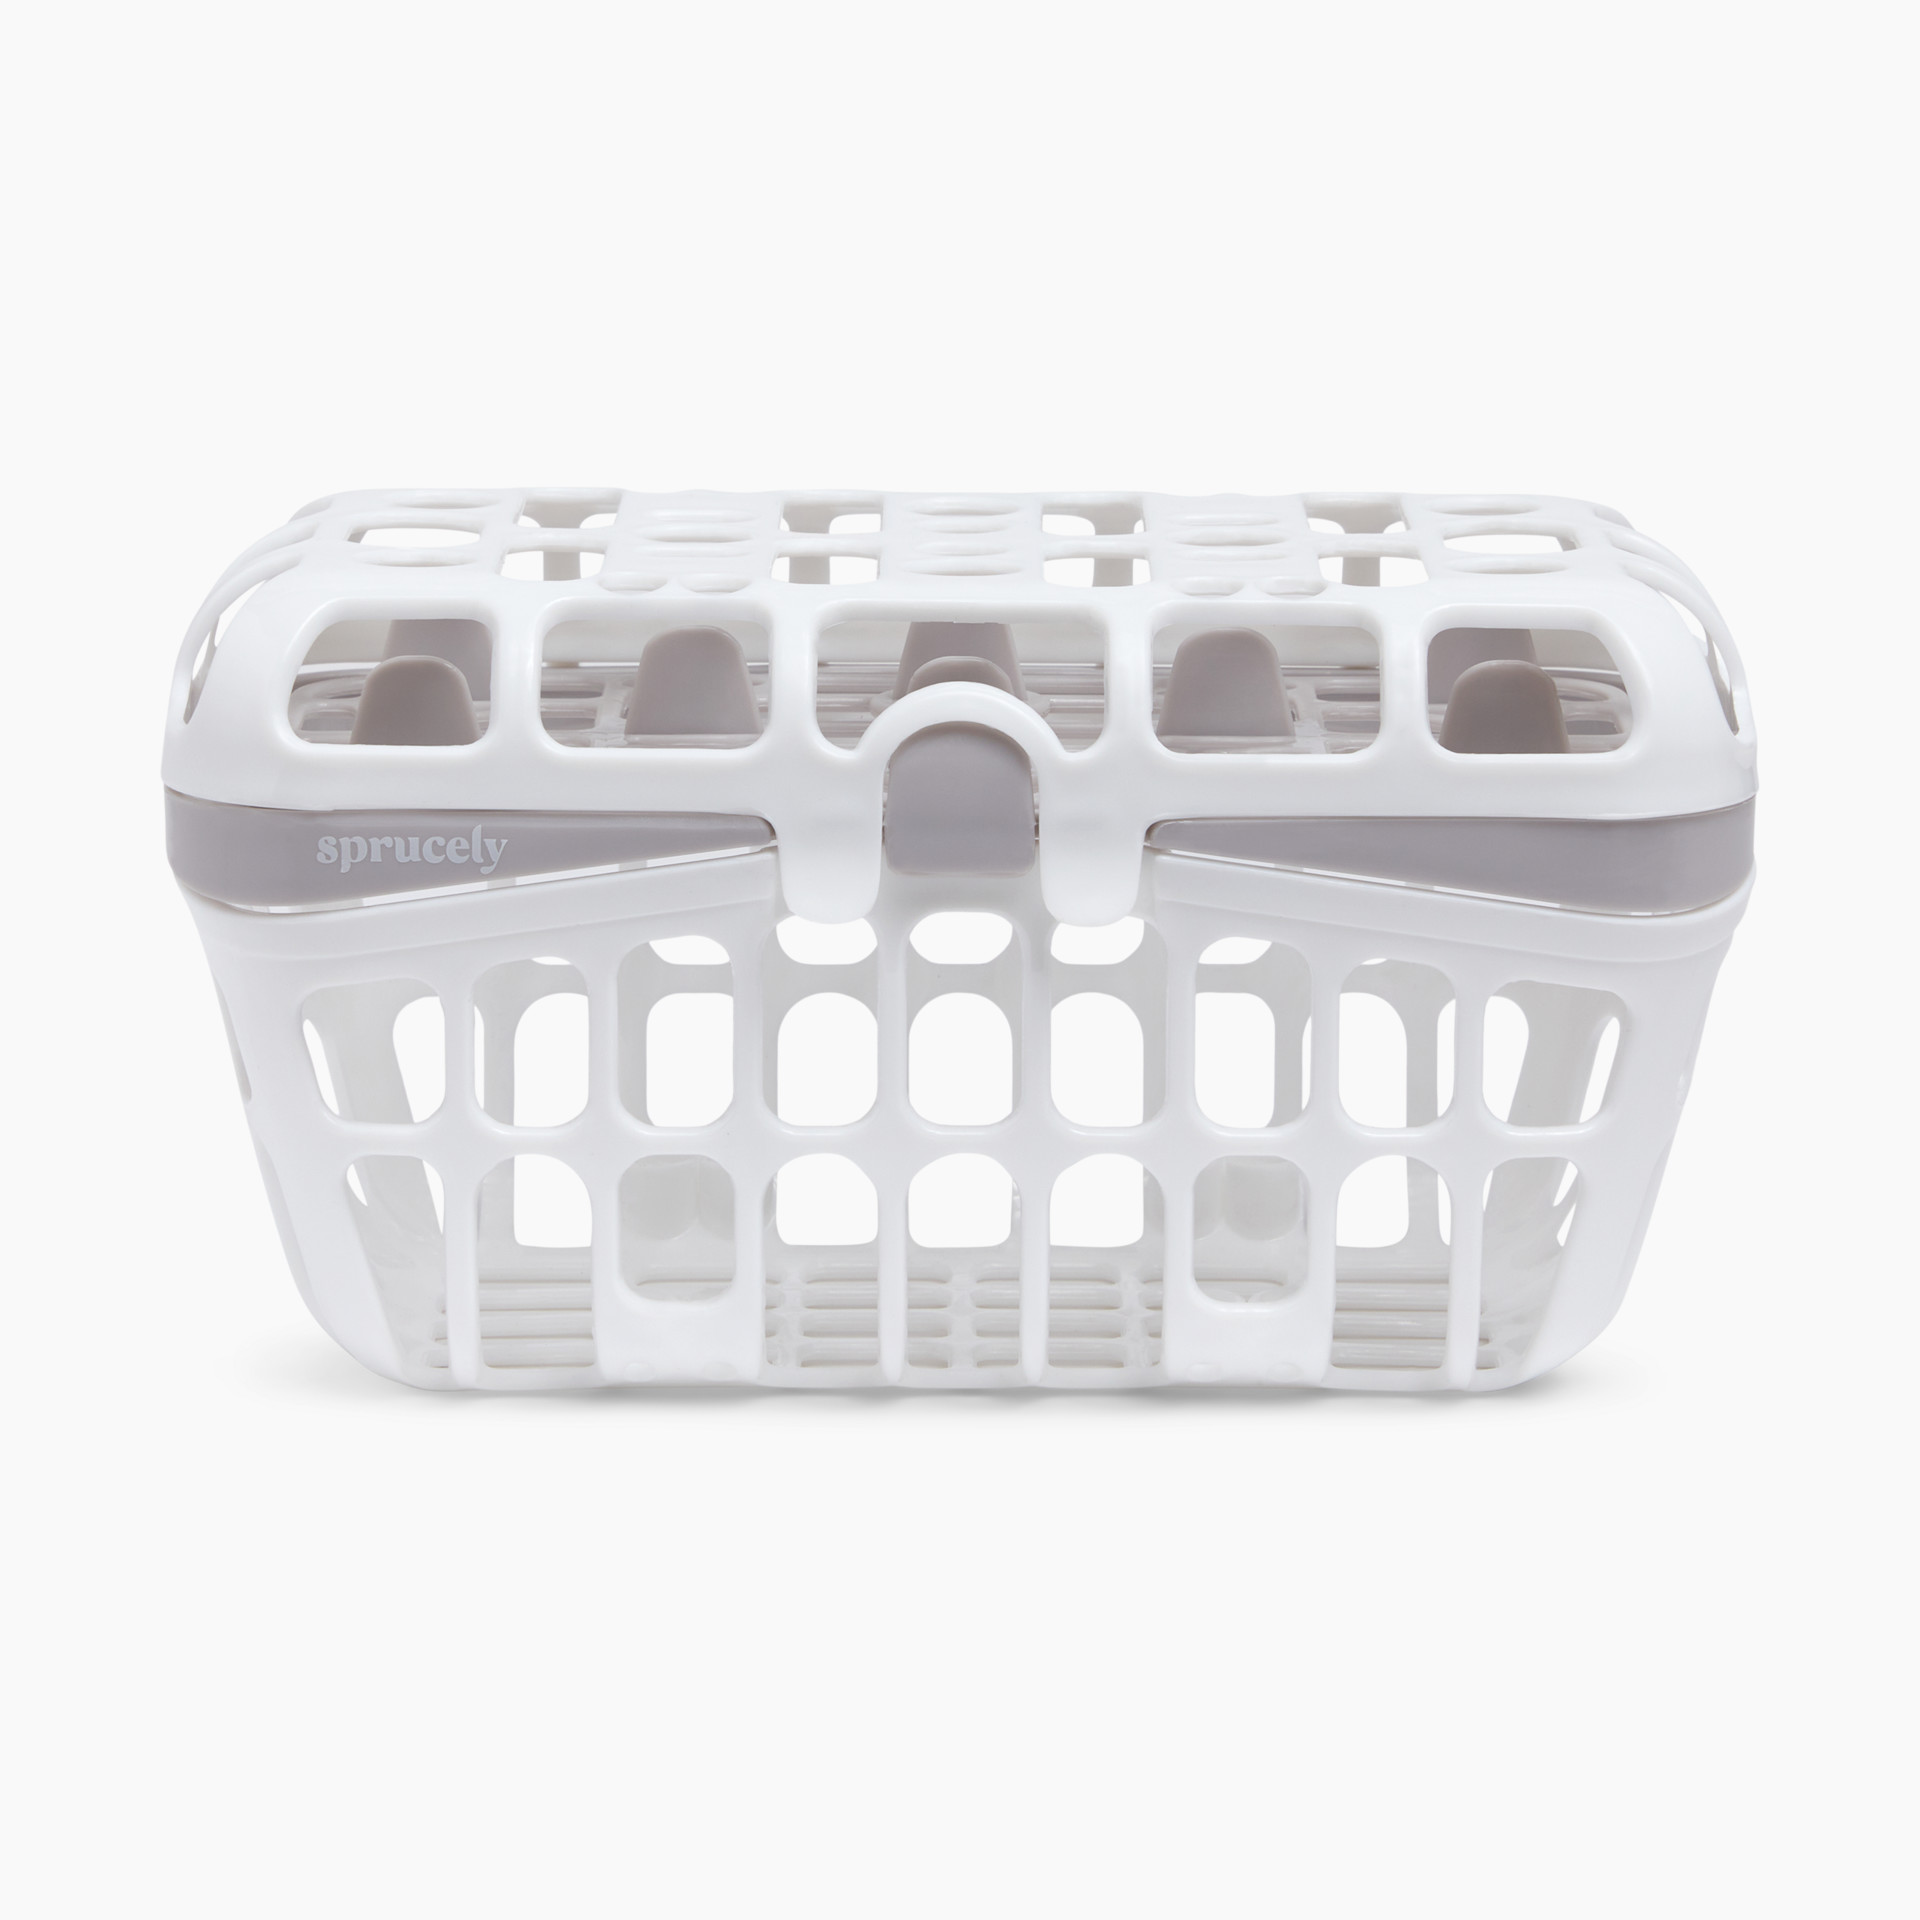 Munchkin® High Capacity Dishwasher Basket, 1 Pack, Grey